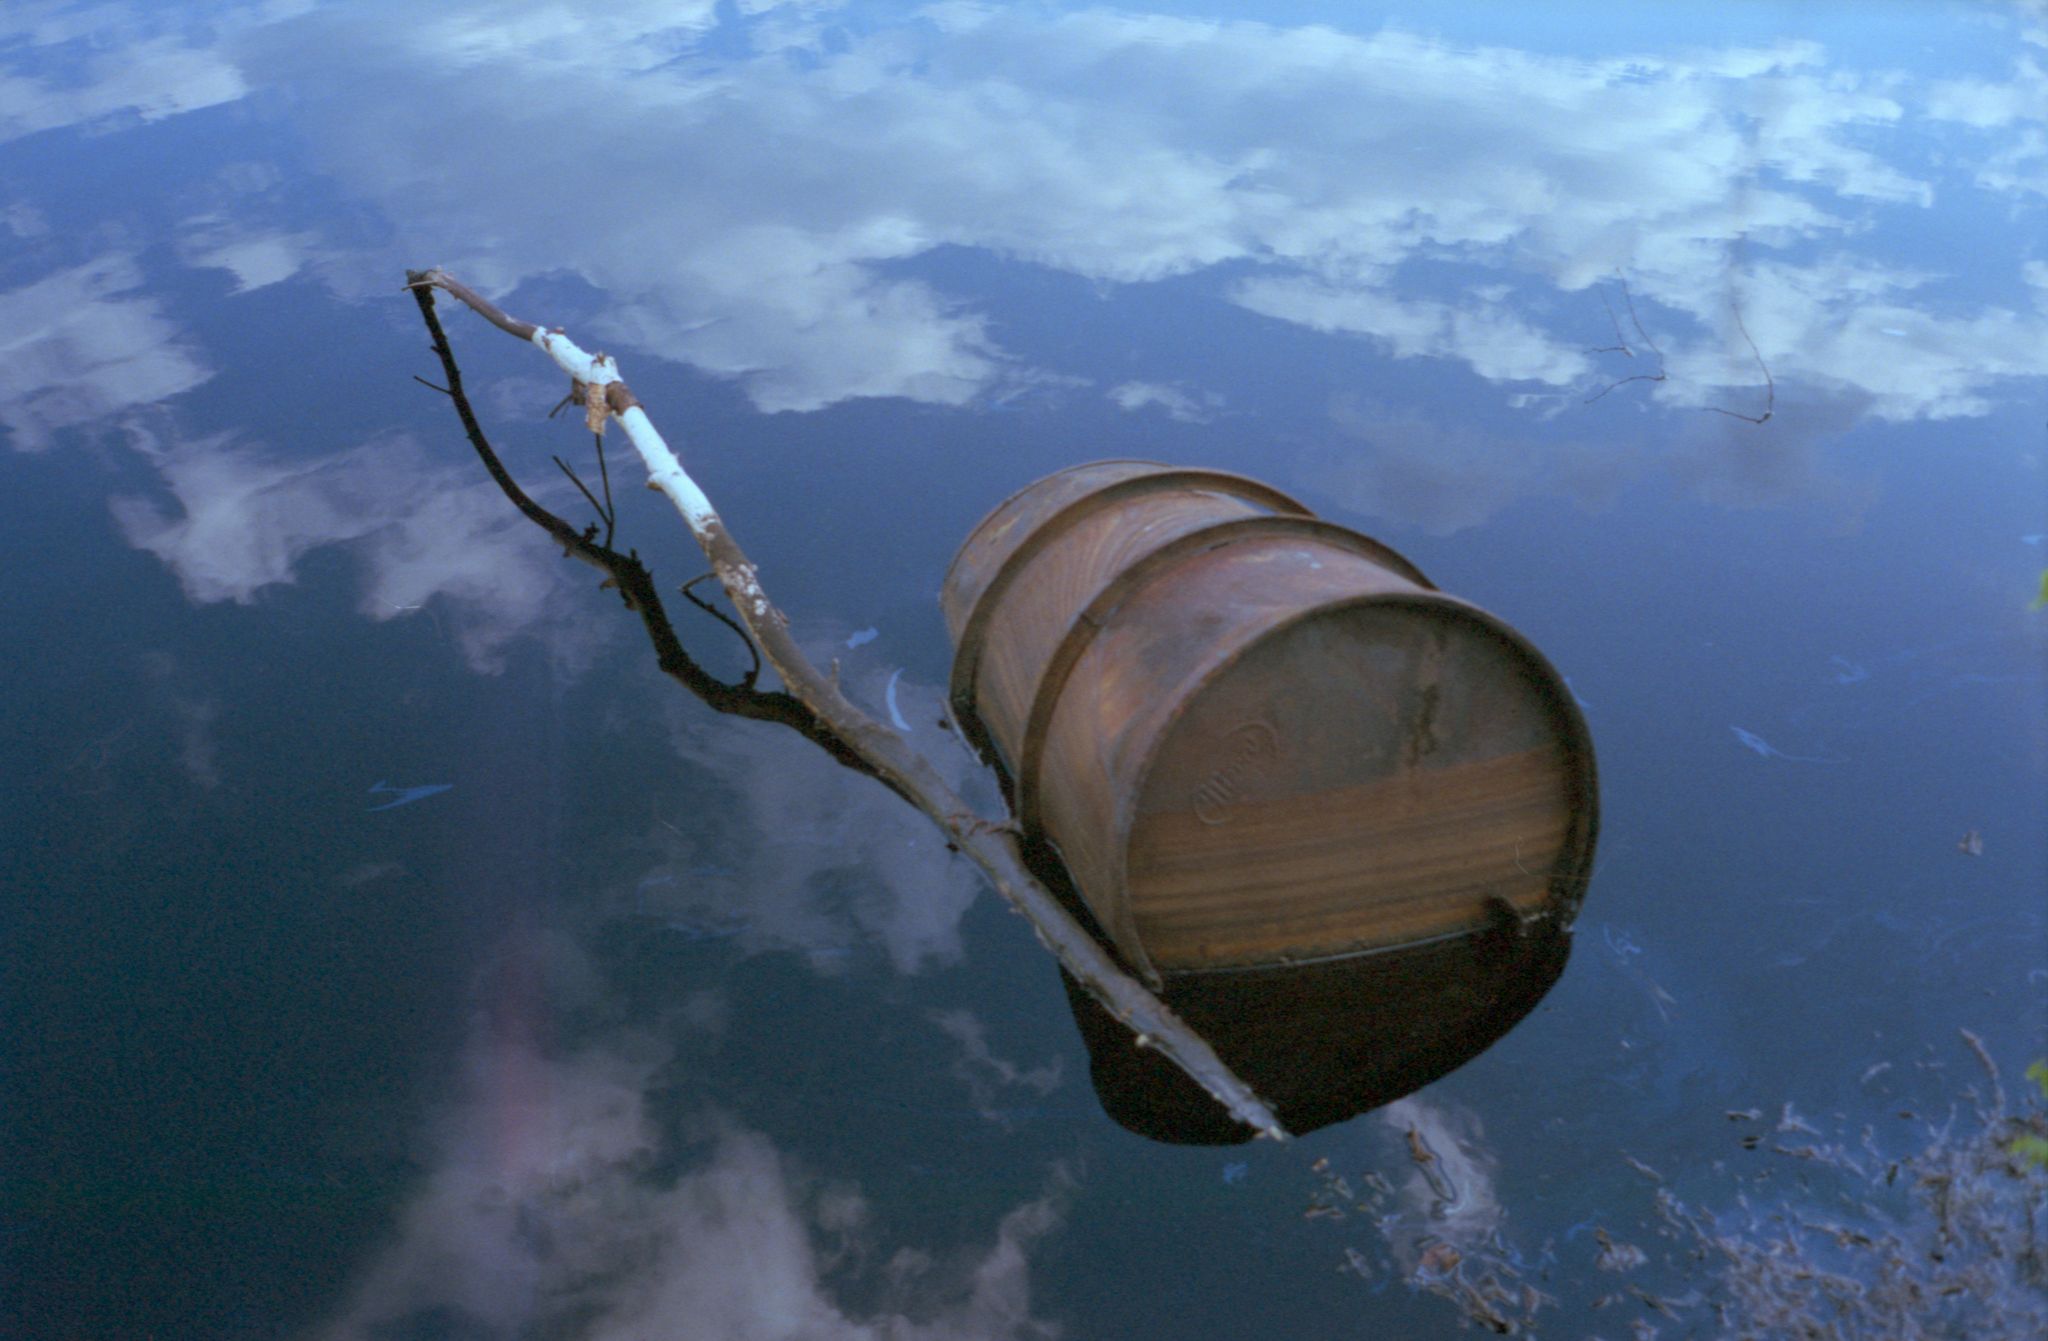 Barrel in a tar pit